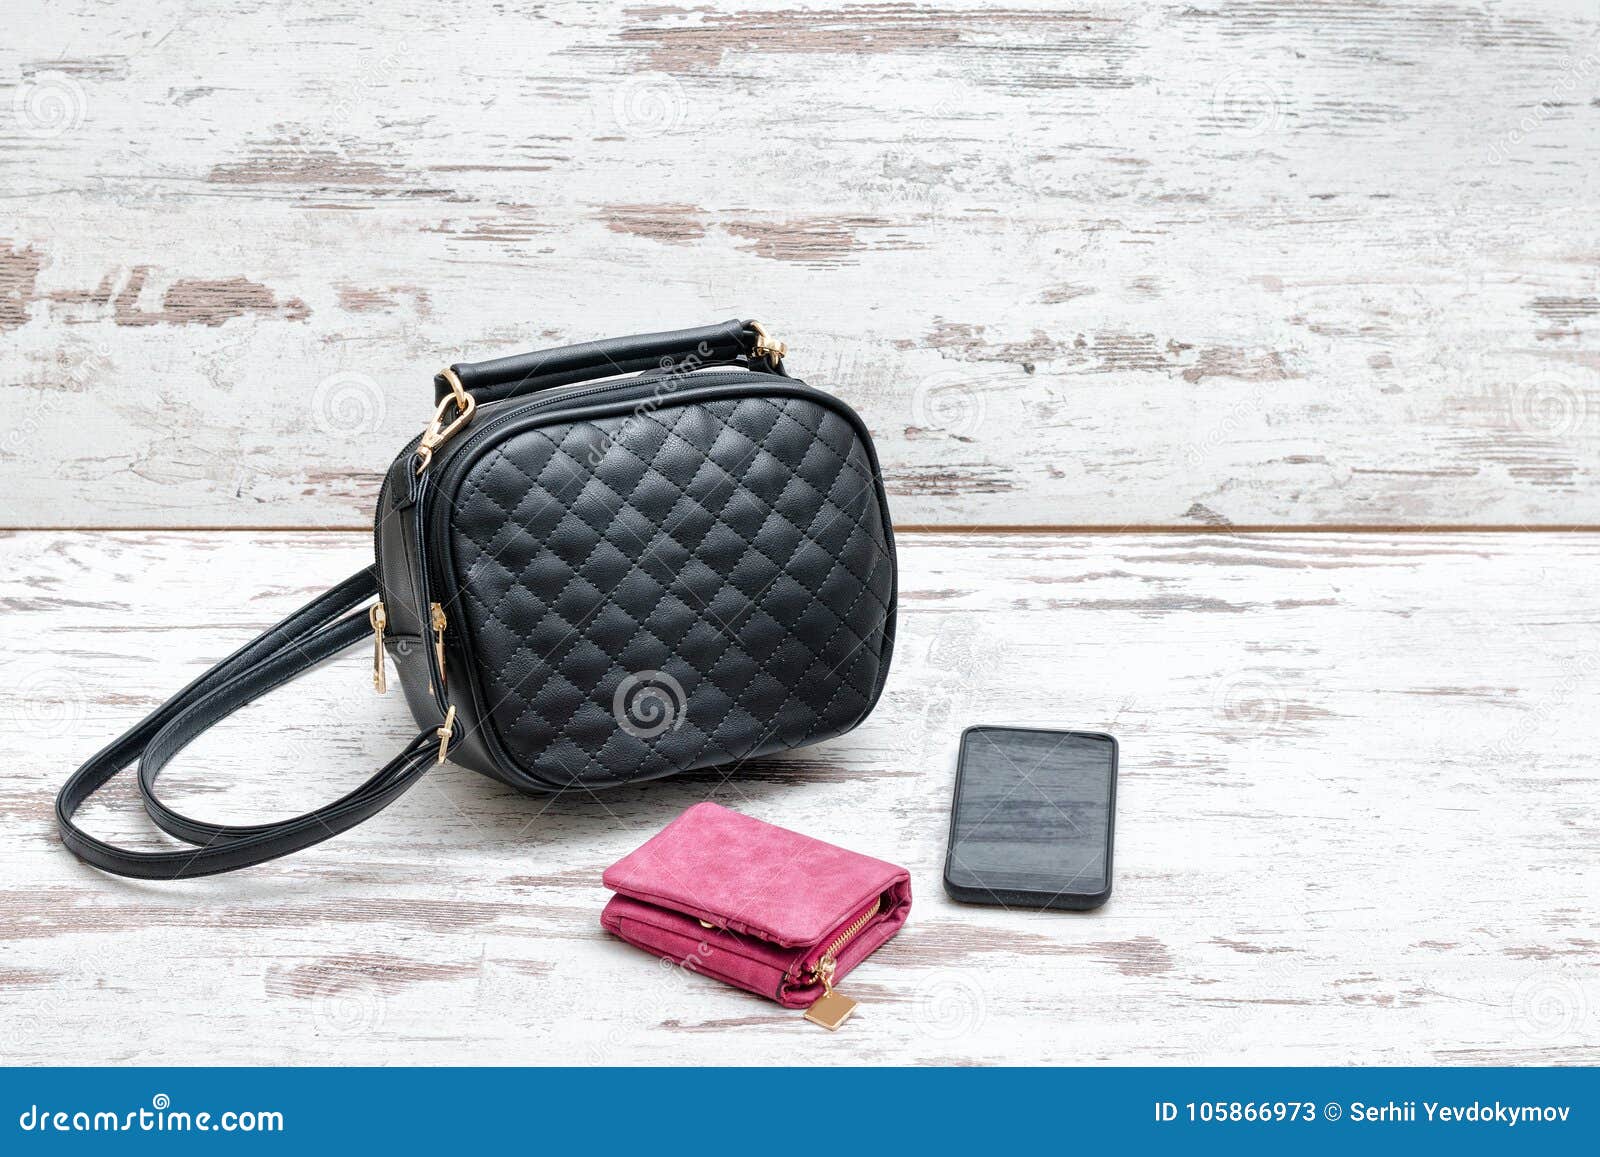 MUSRAT Black Hand-held Bag Latest Trend Party Wear Handbag & Sling Bag with  Adjustable Strap for Girls and Women's BLACK - Price in India | Flipkart.com